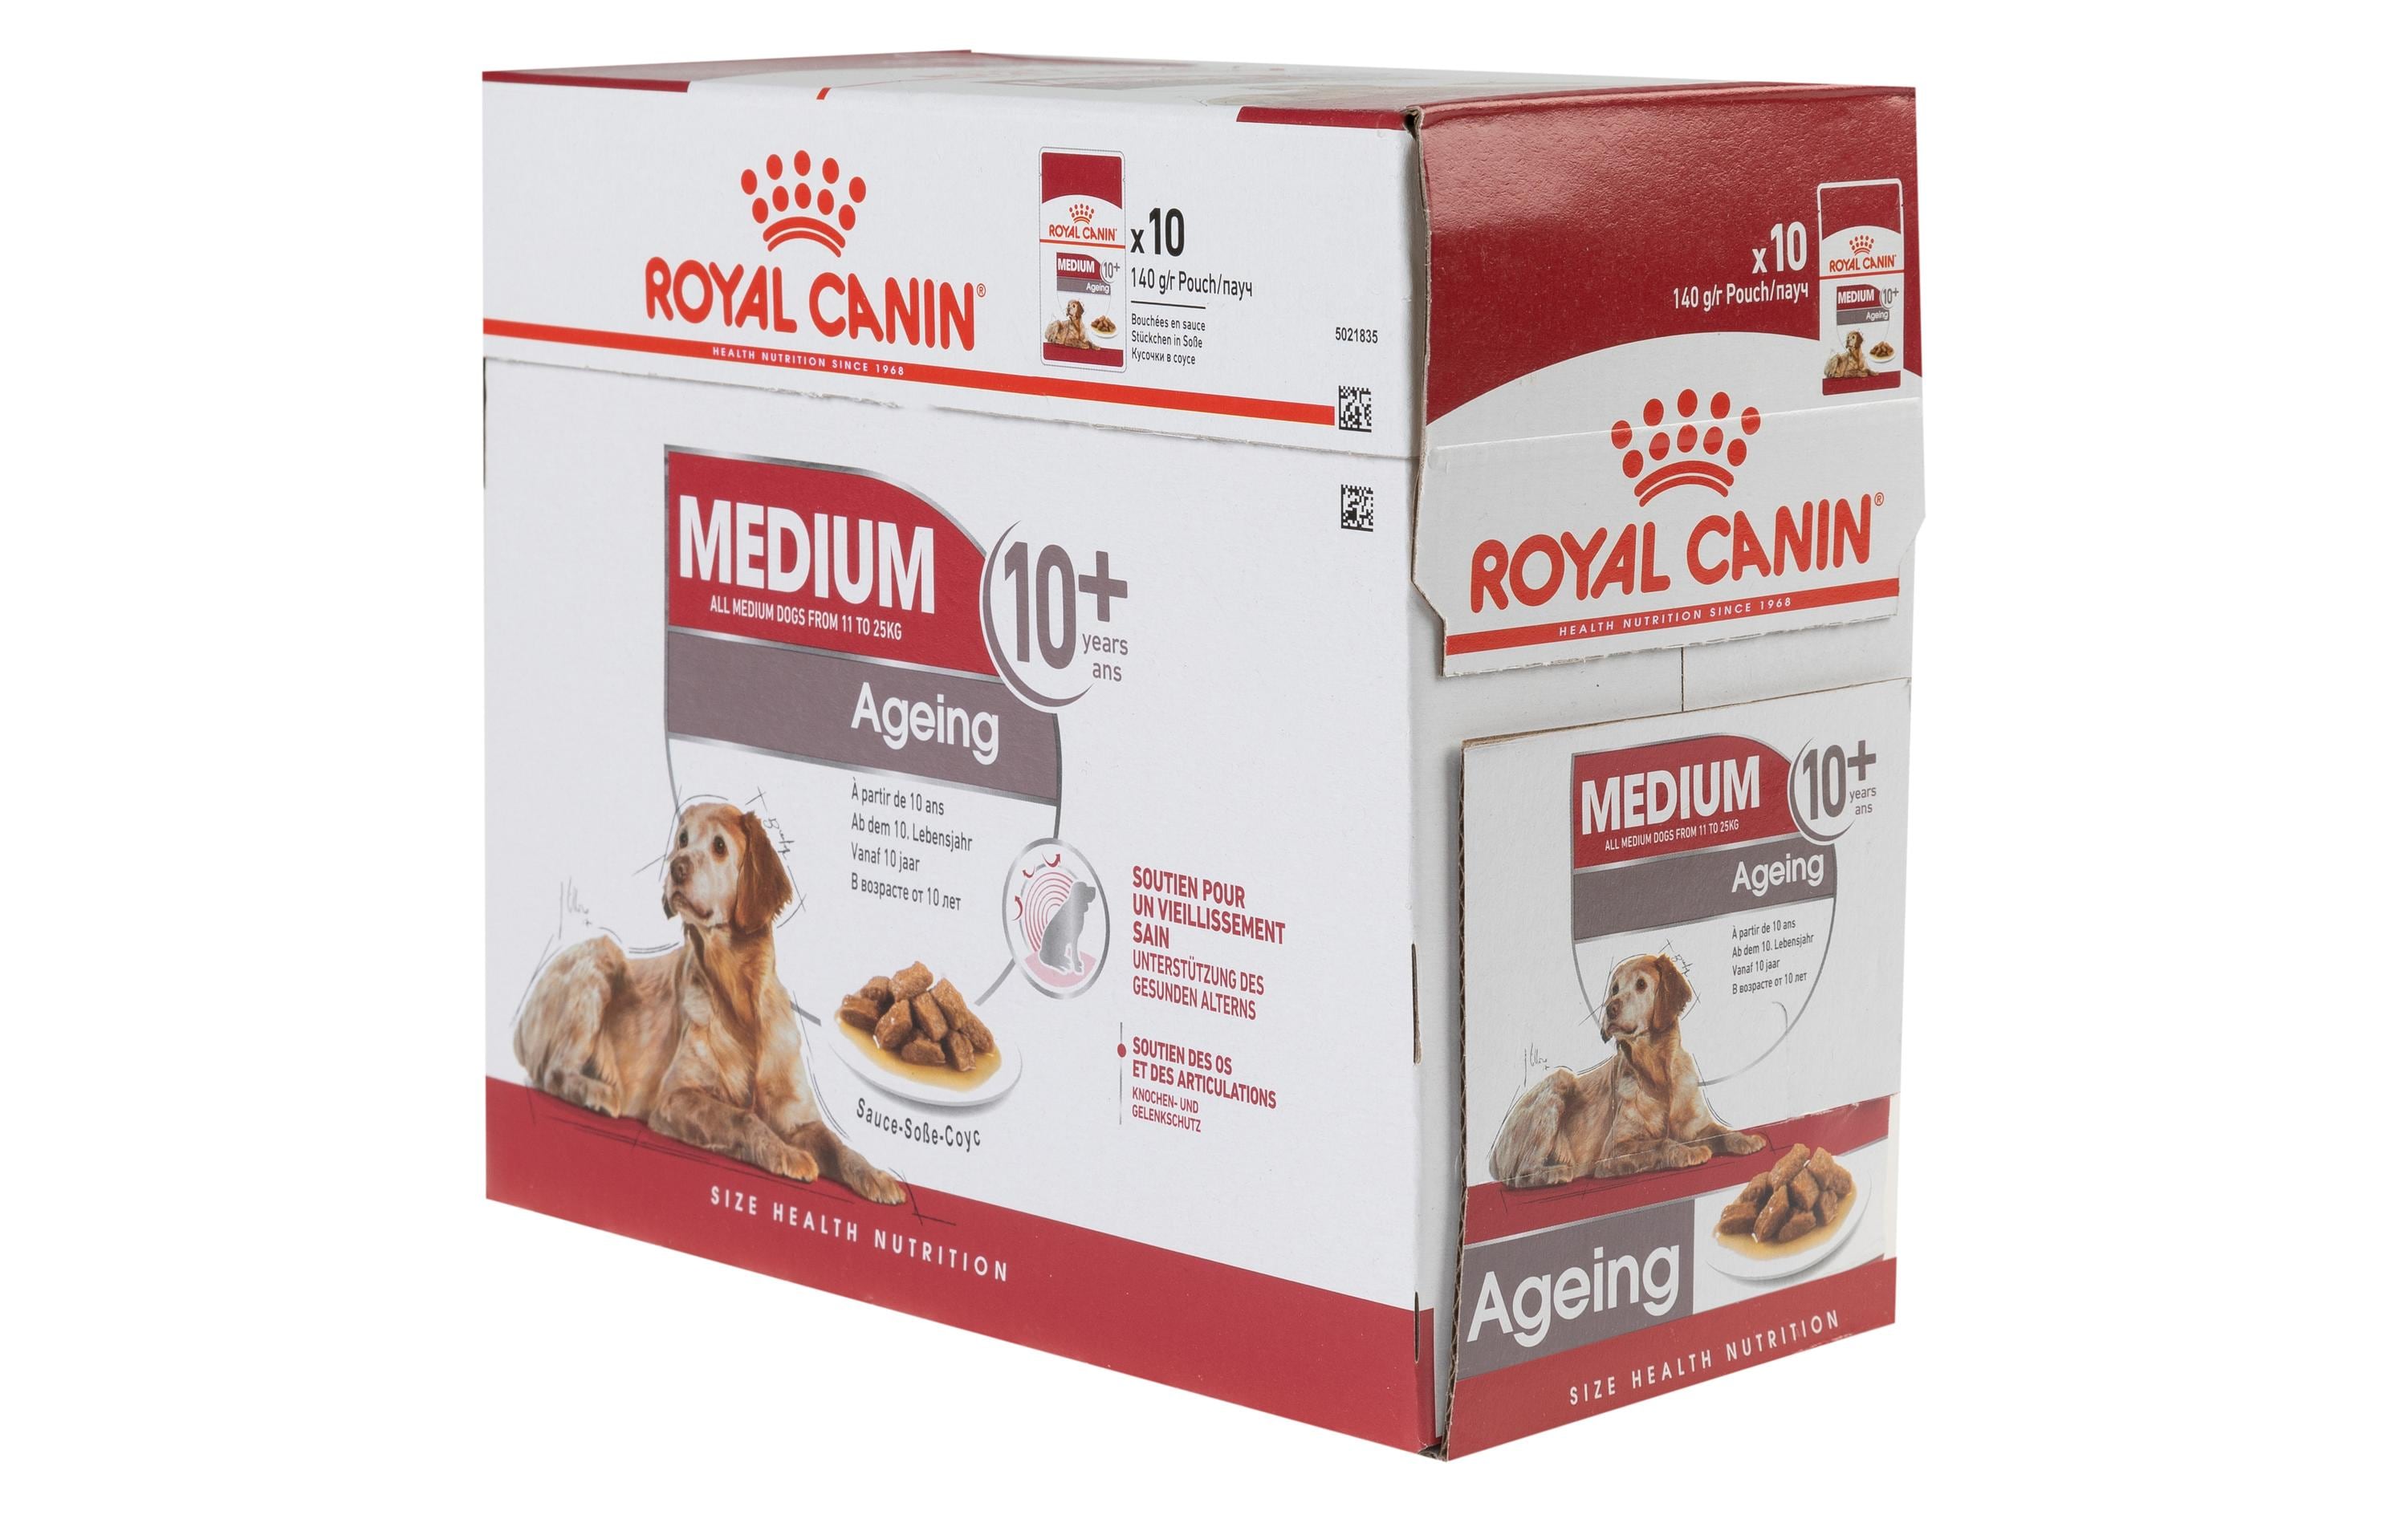 Royal Canin Nassfutter Health Nutrition Medium Ageing 10+, 10 x 140g